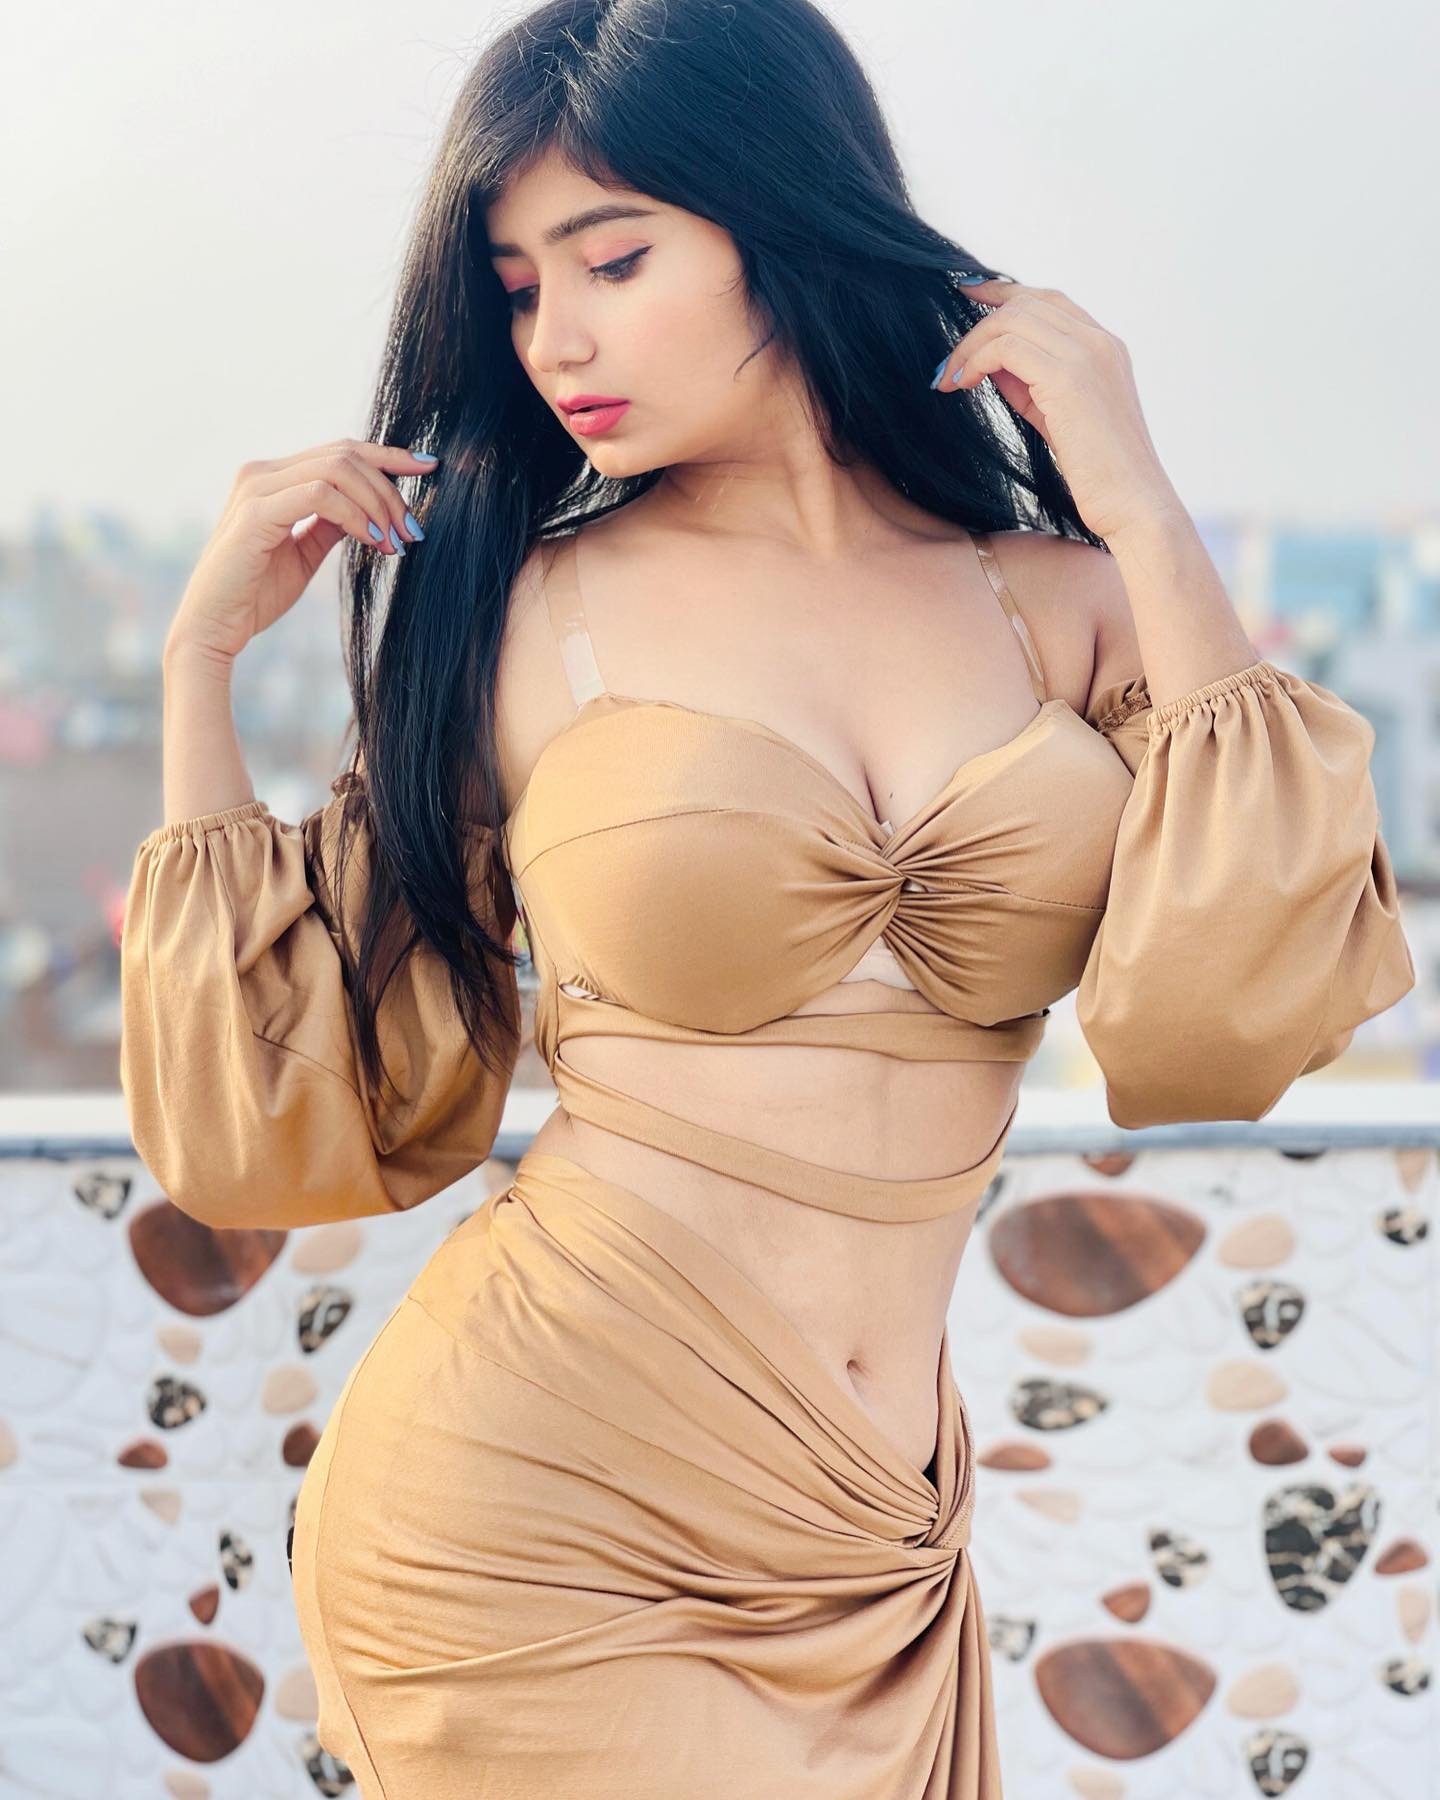 Neha Singh nehasingh9902 tiktok top indian instagram model curvy hot sexy figure neha singh porn xxx sexy boobs dance Europe top models 16pluslk.com